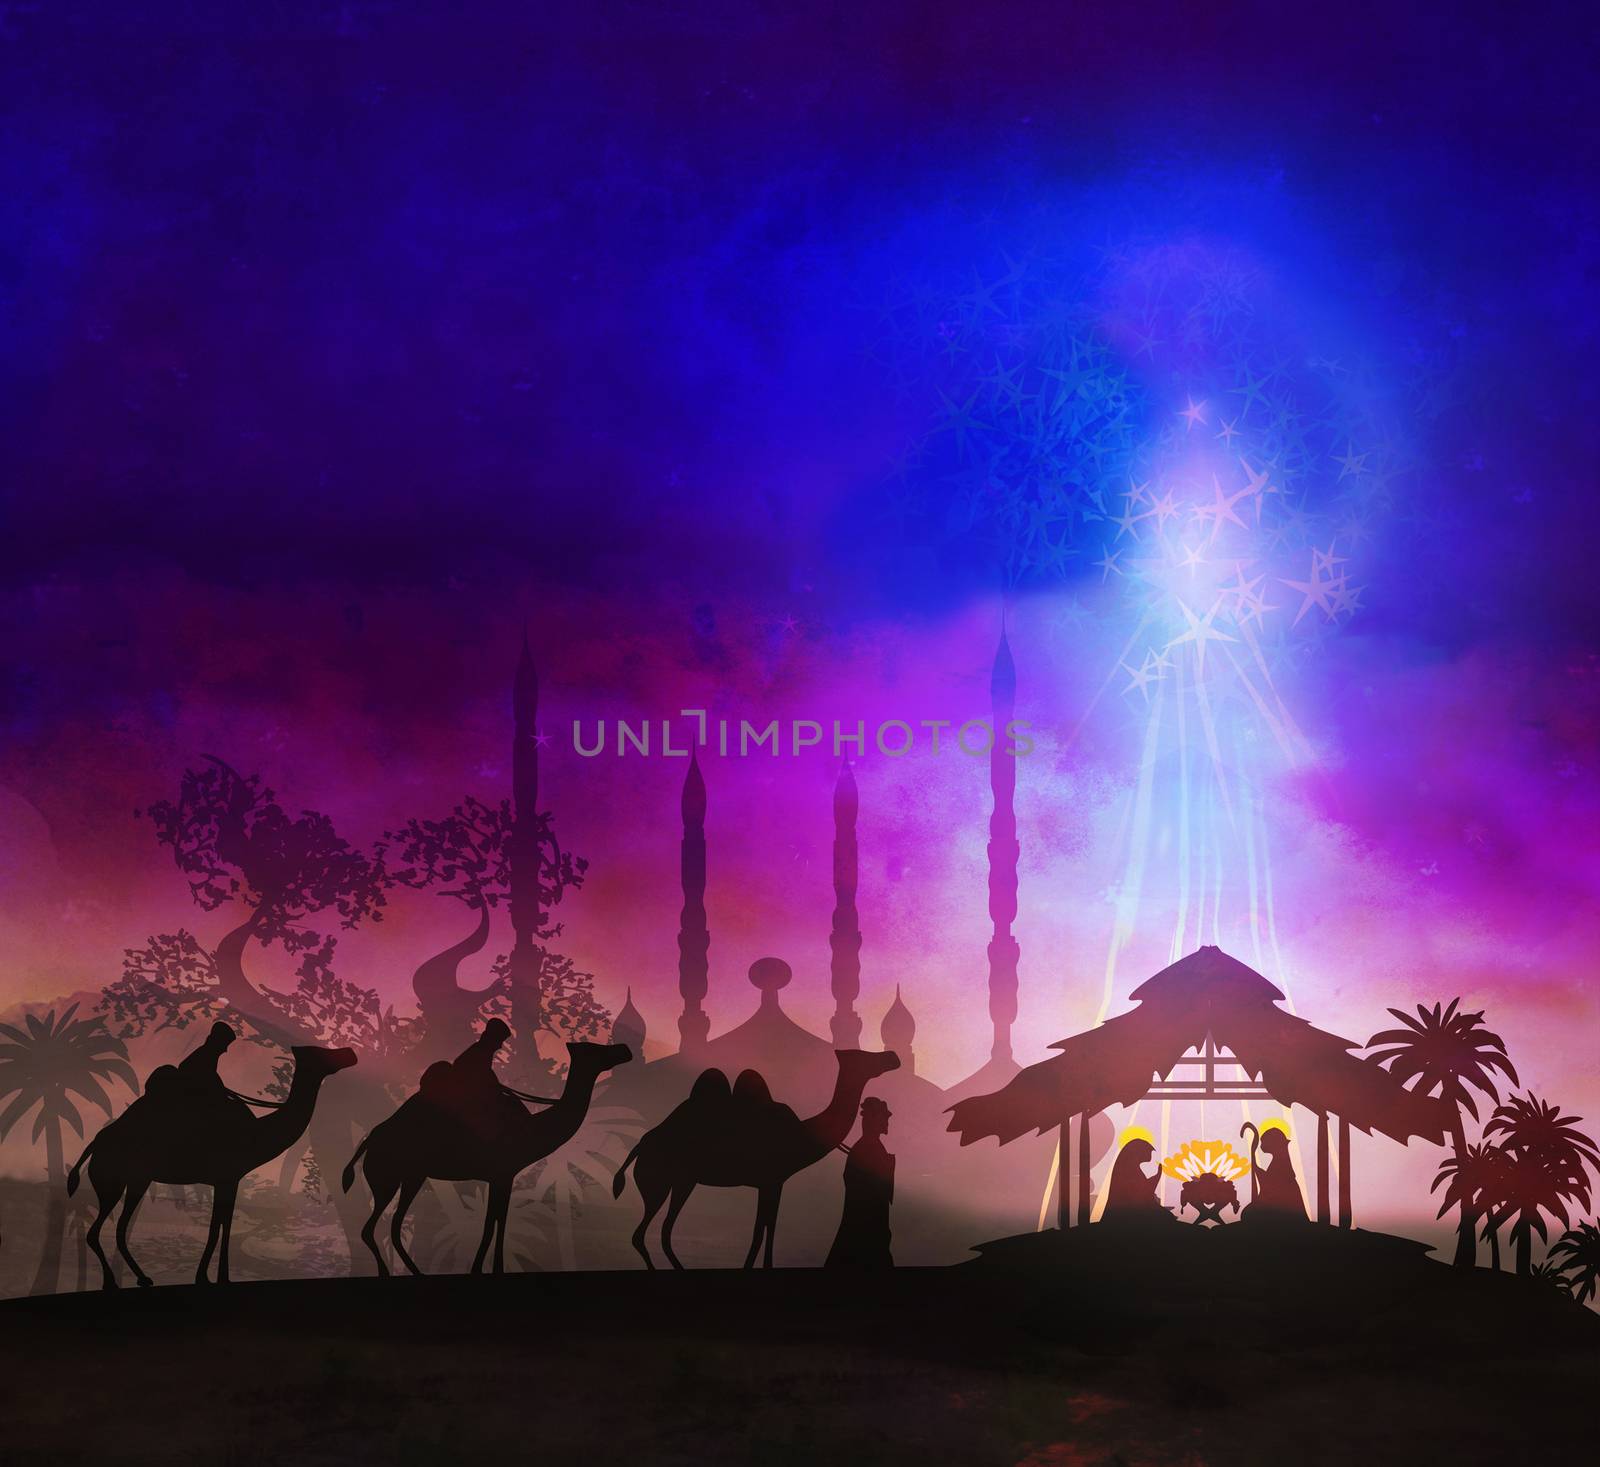 Biblical scene - birth of Jesus in Bethlehem. by JackyBrown